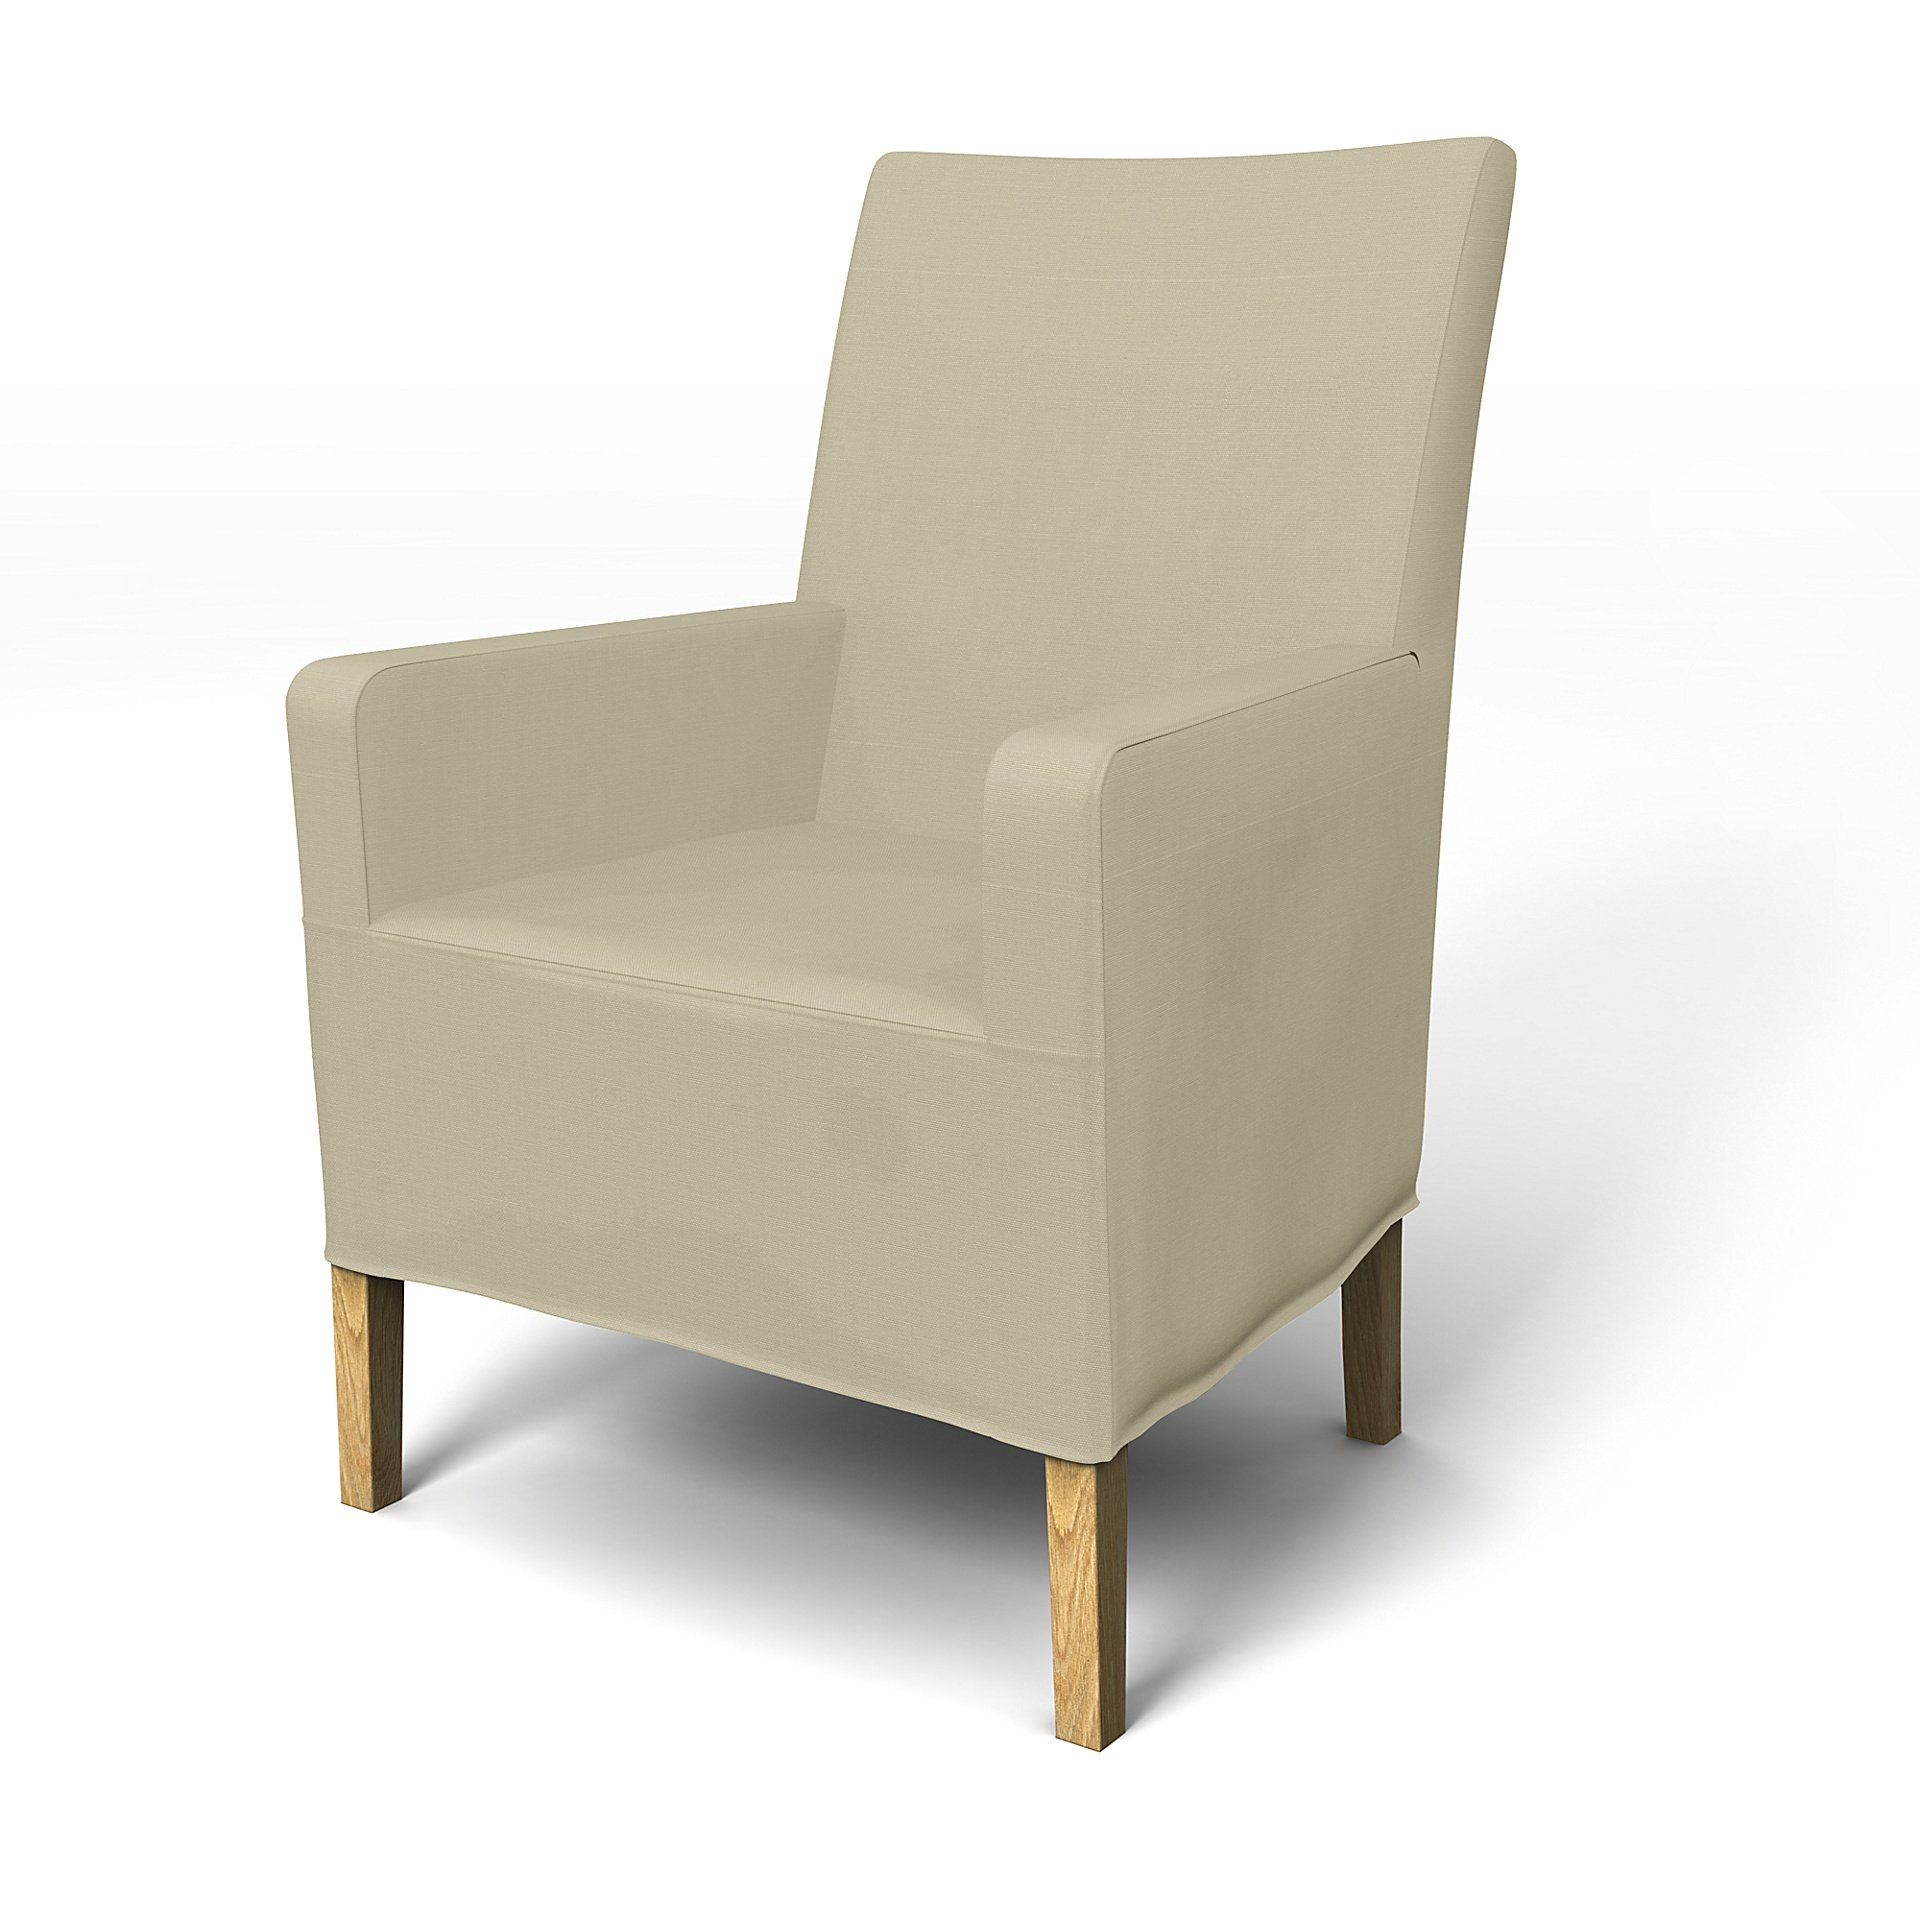 IKEA - Henriksdal, Chair cover w/ armrest, medium length skirt, Sand Beige, Cotton - Bemz